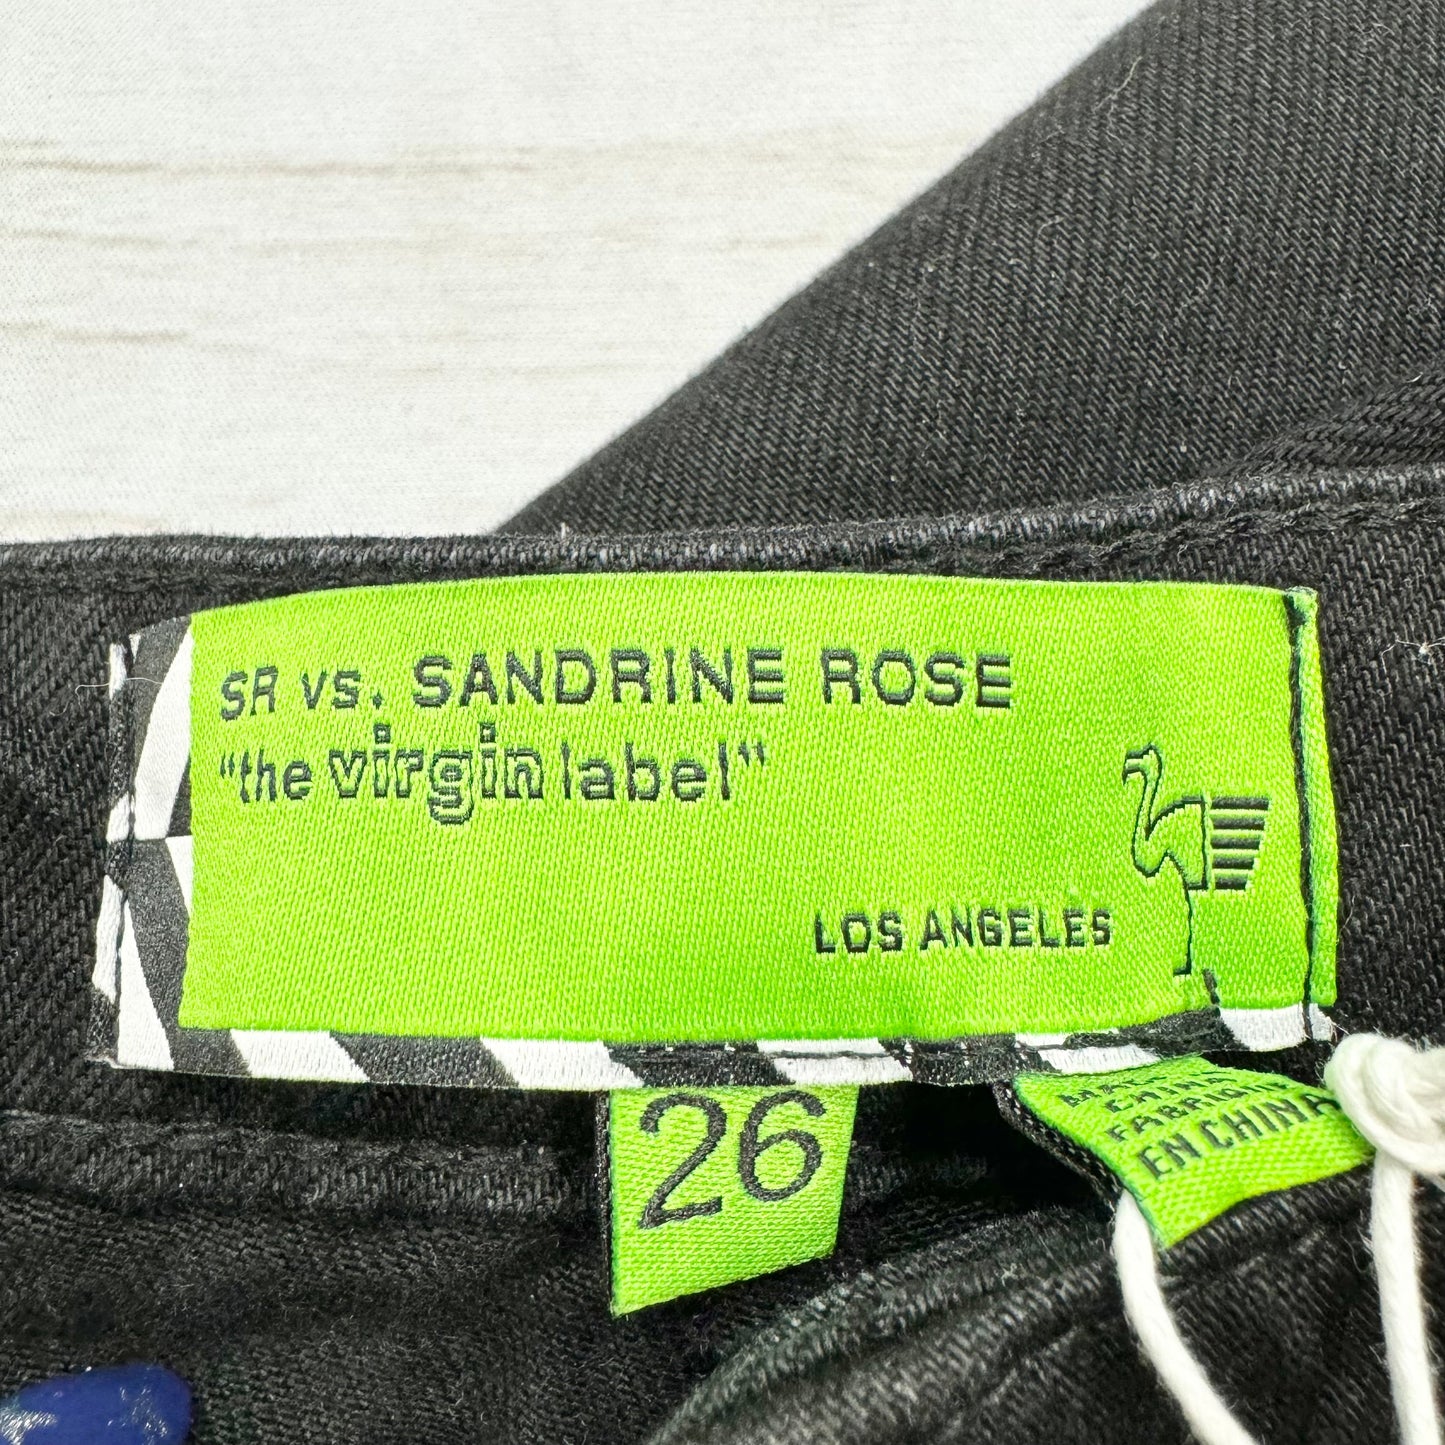 Jeans Straight By SR vs Sandrine Rose  Size: 2